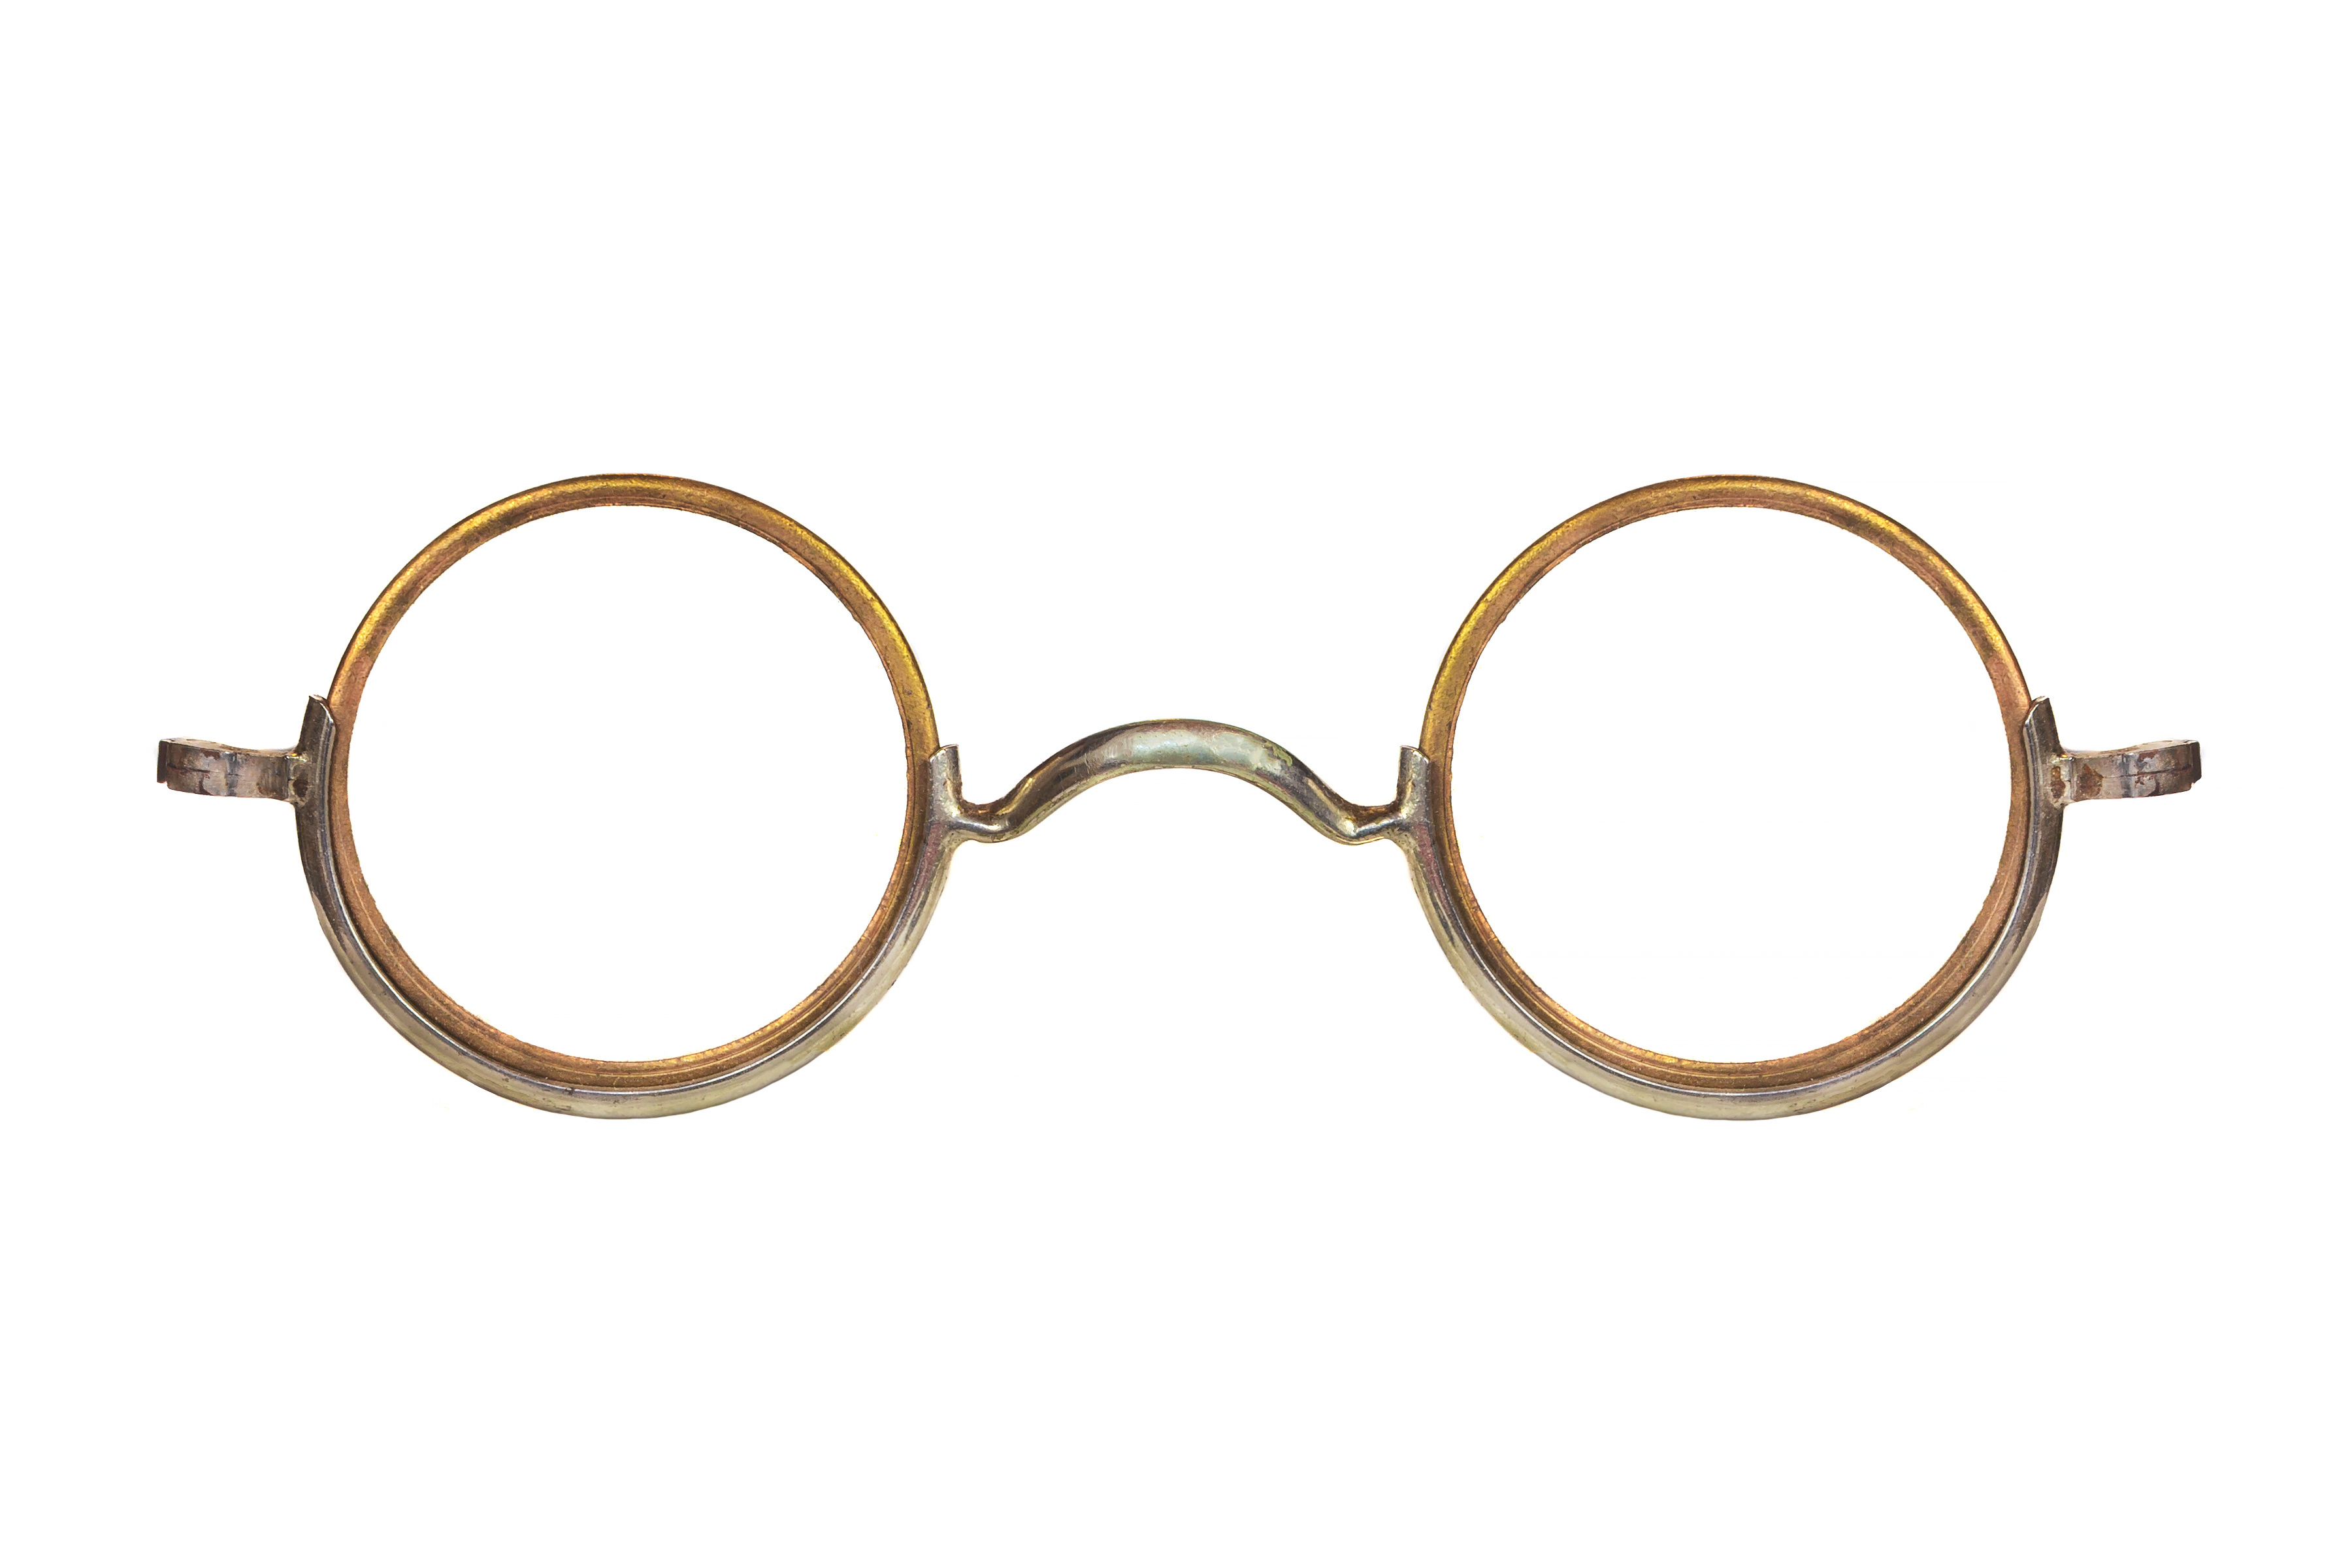 An old eyeglass frame